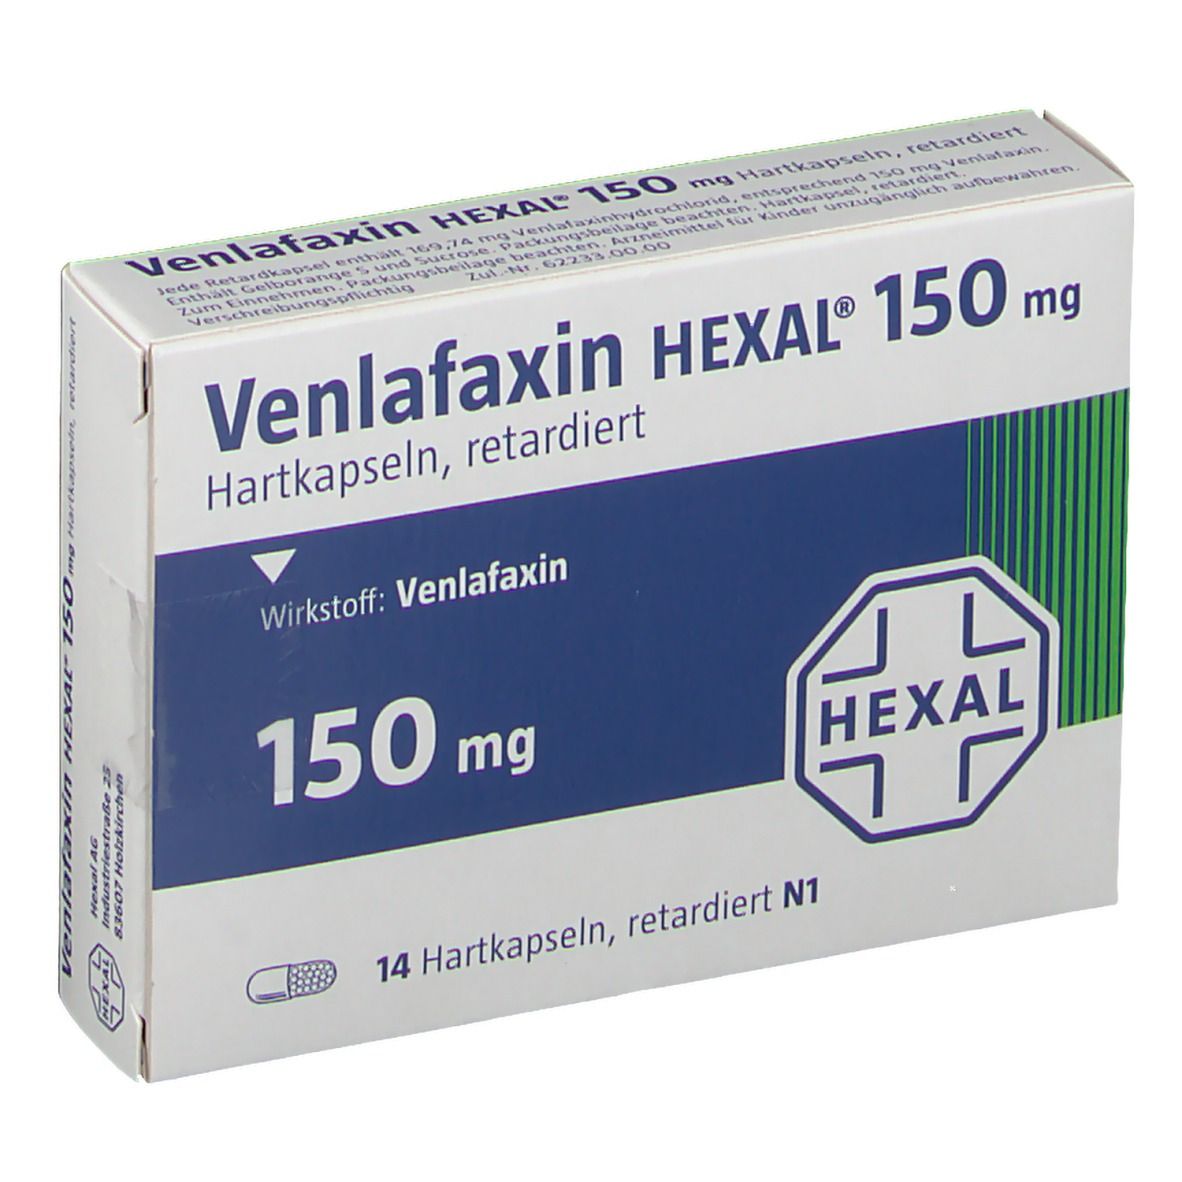 Venlafaxin HEXAL® 150 mg